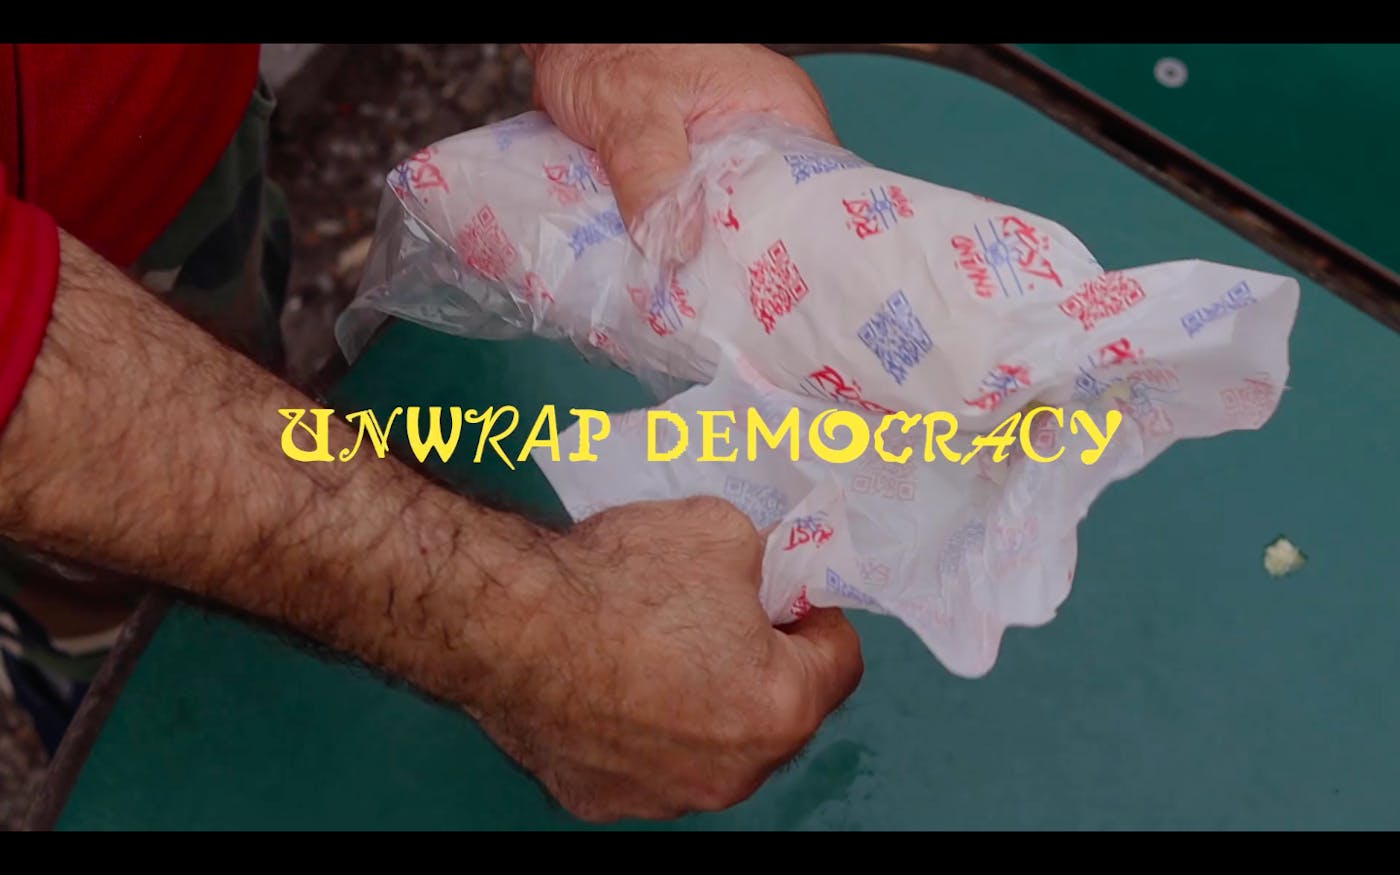 Unwrap democracy 1